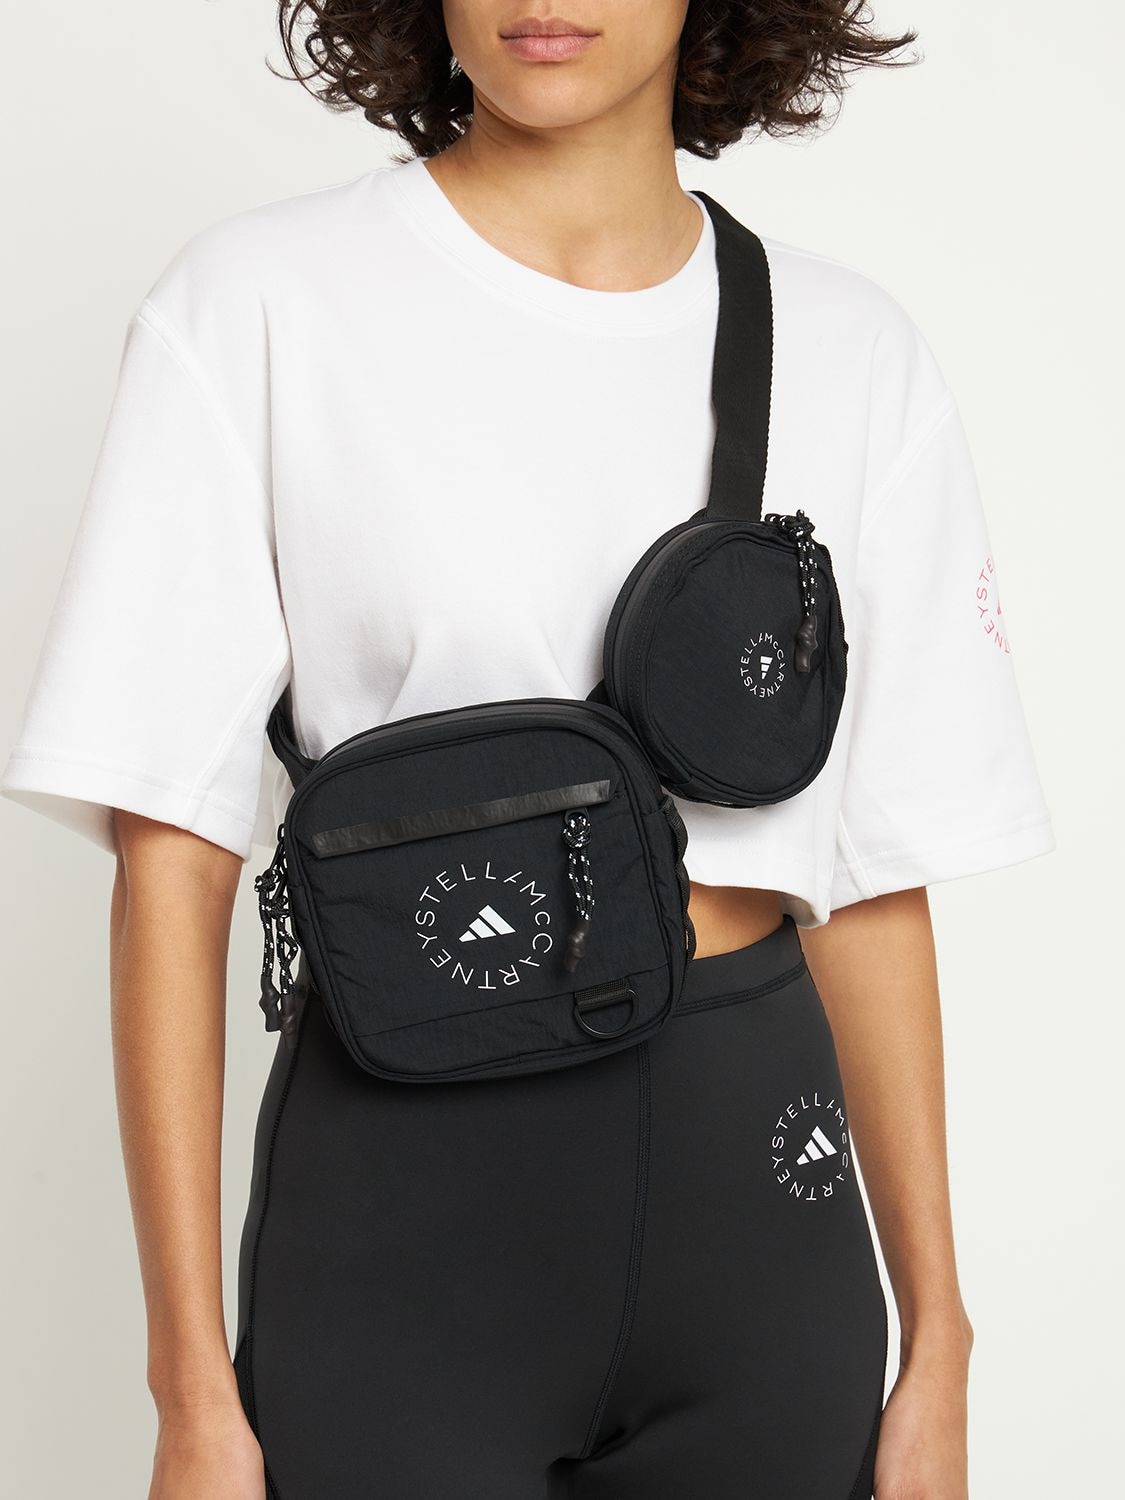 Adidas X Stella McCartney Asmc Pockets On The Waist Belt Bag